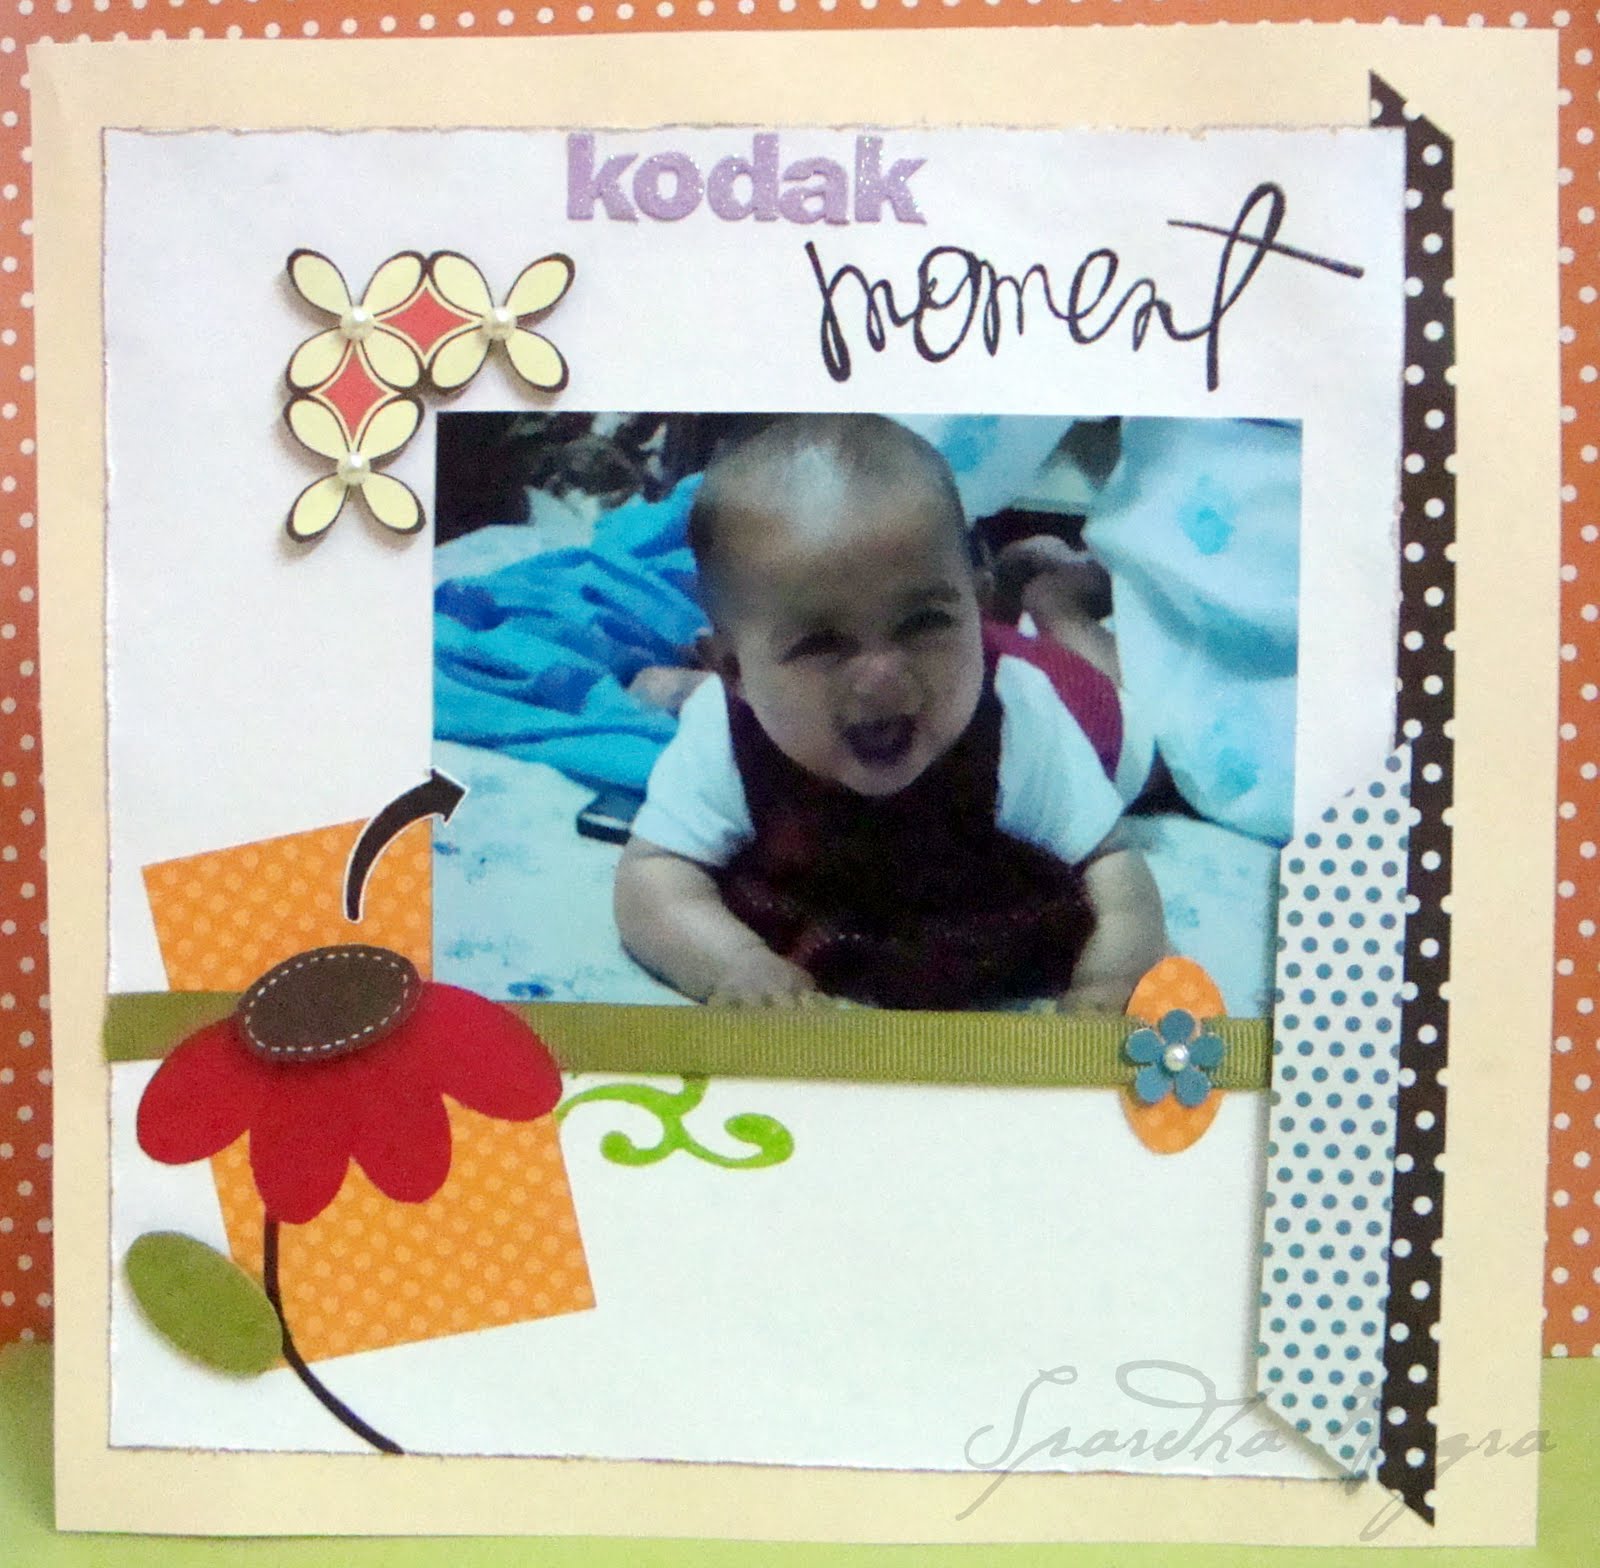 Kodak Moment | Kodak moment, Fictional characters, Kodak